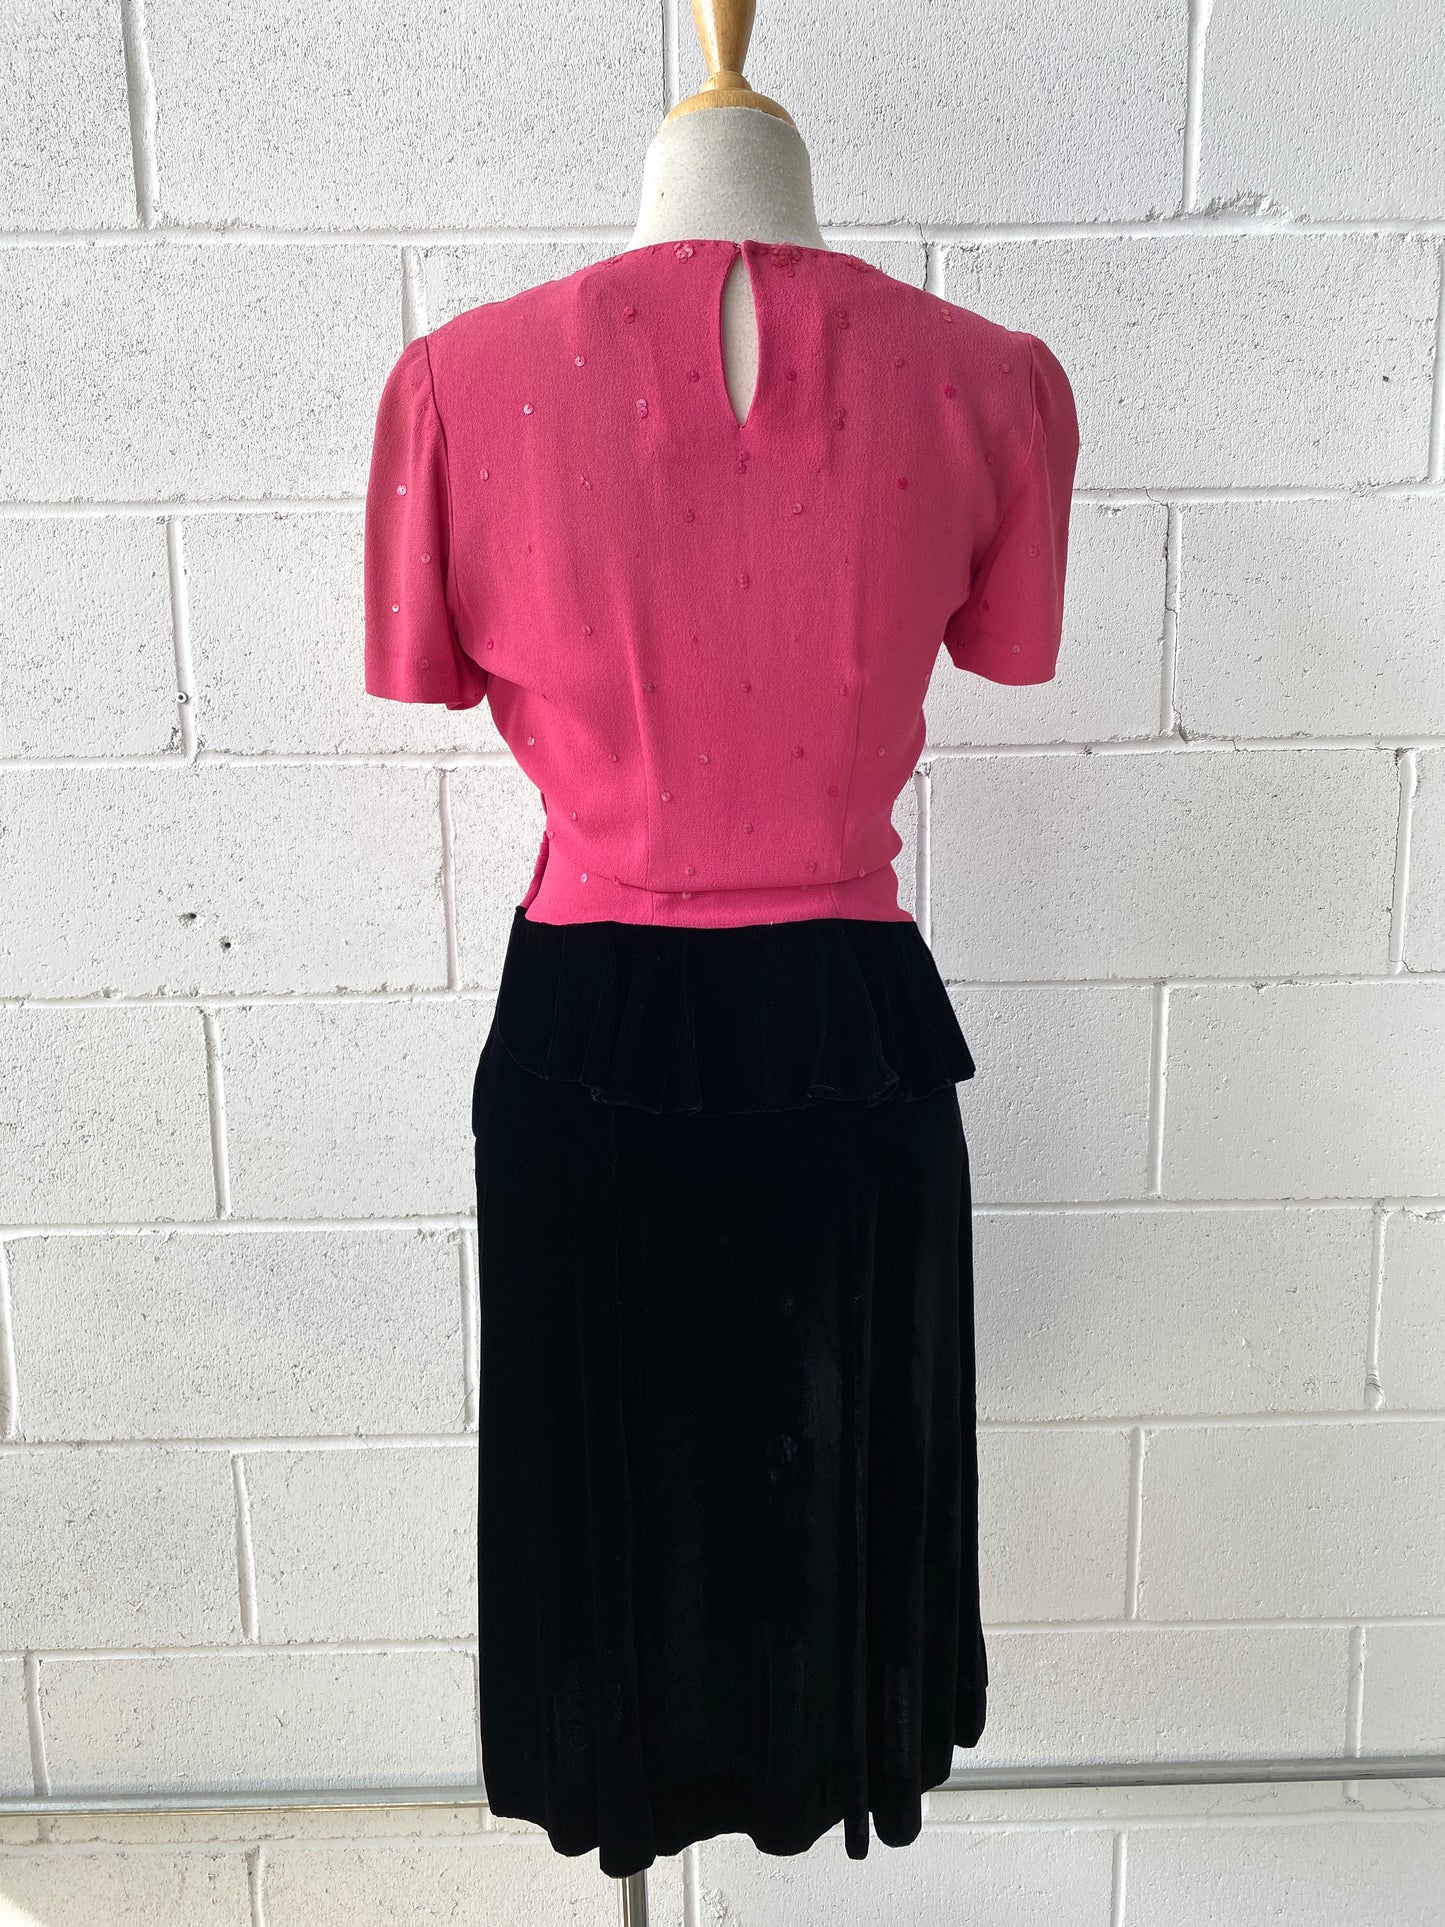 Vintage 1940s Black & Pink Sequin Peplum Cocktail Dress, W25"